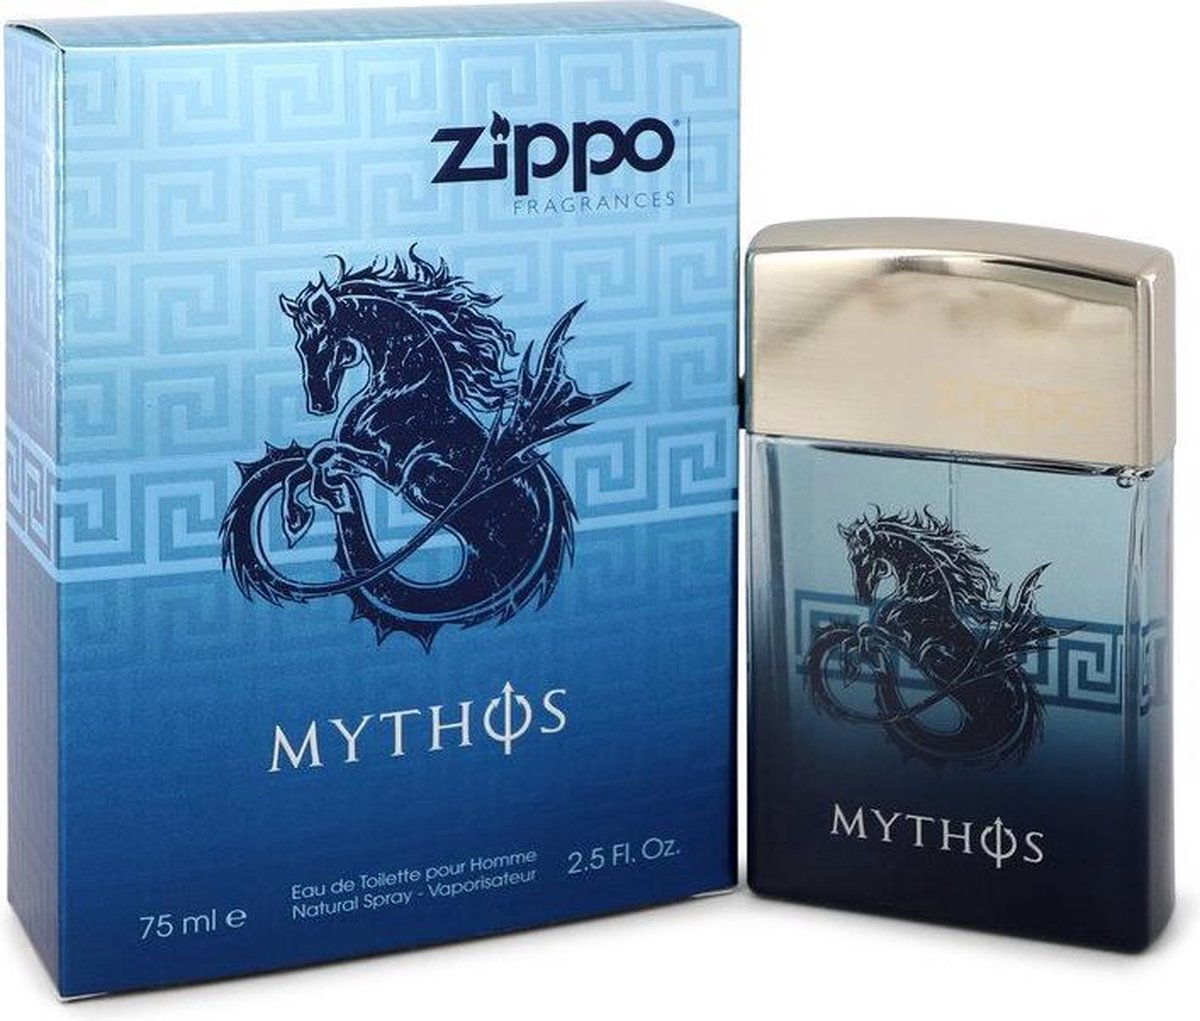 Zippo Mythos by Zippo 40 ml - Eau De Toilette Spray